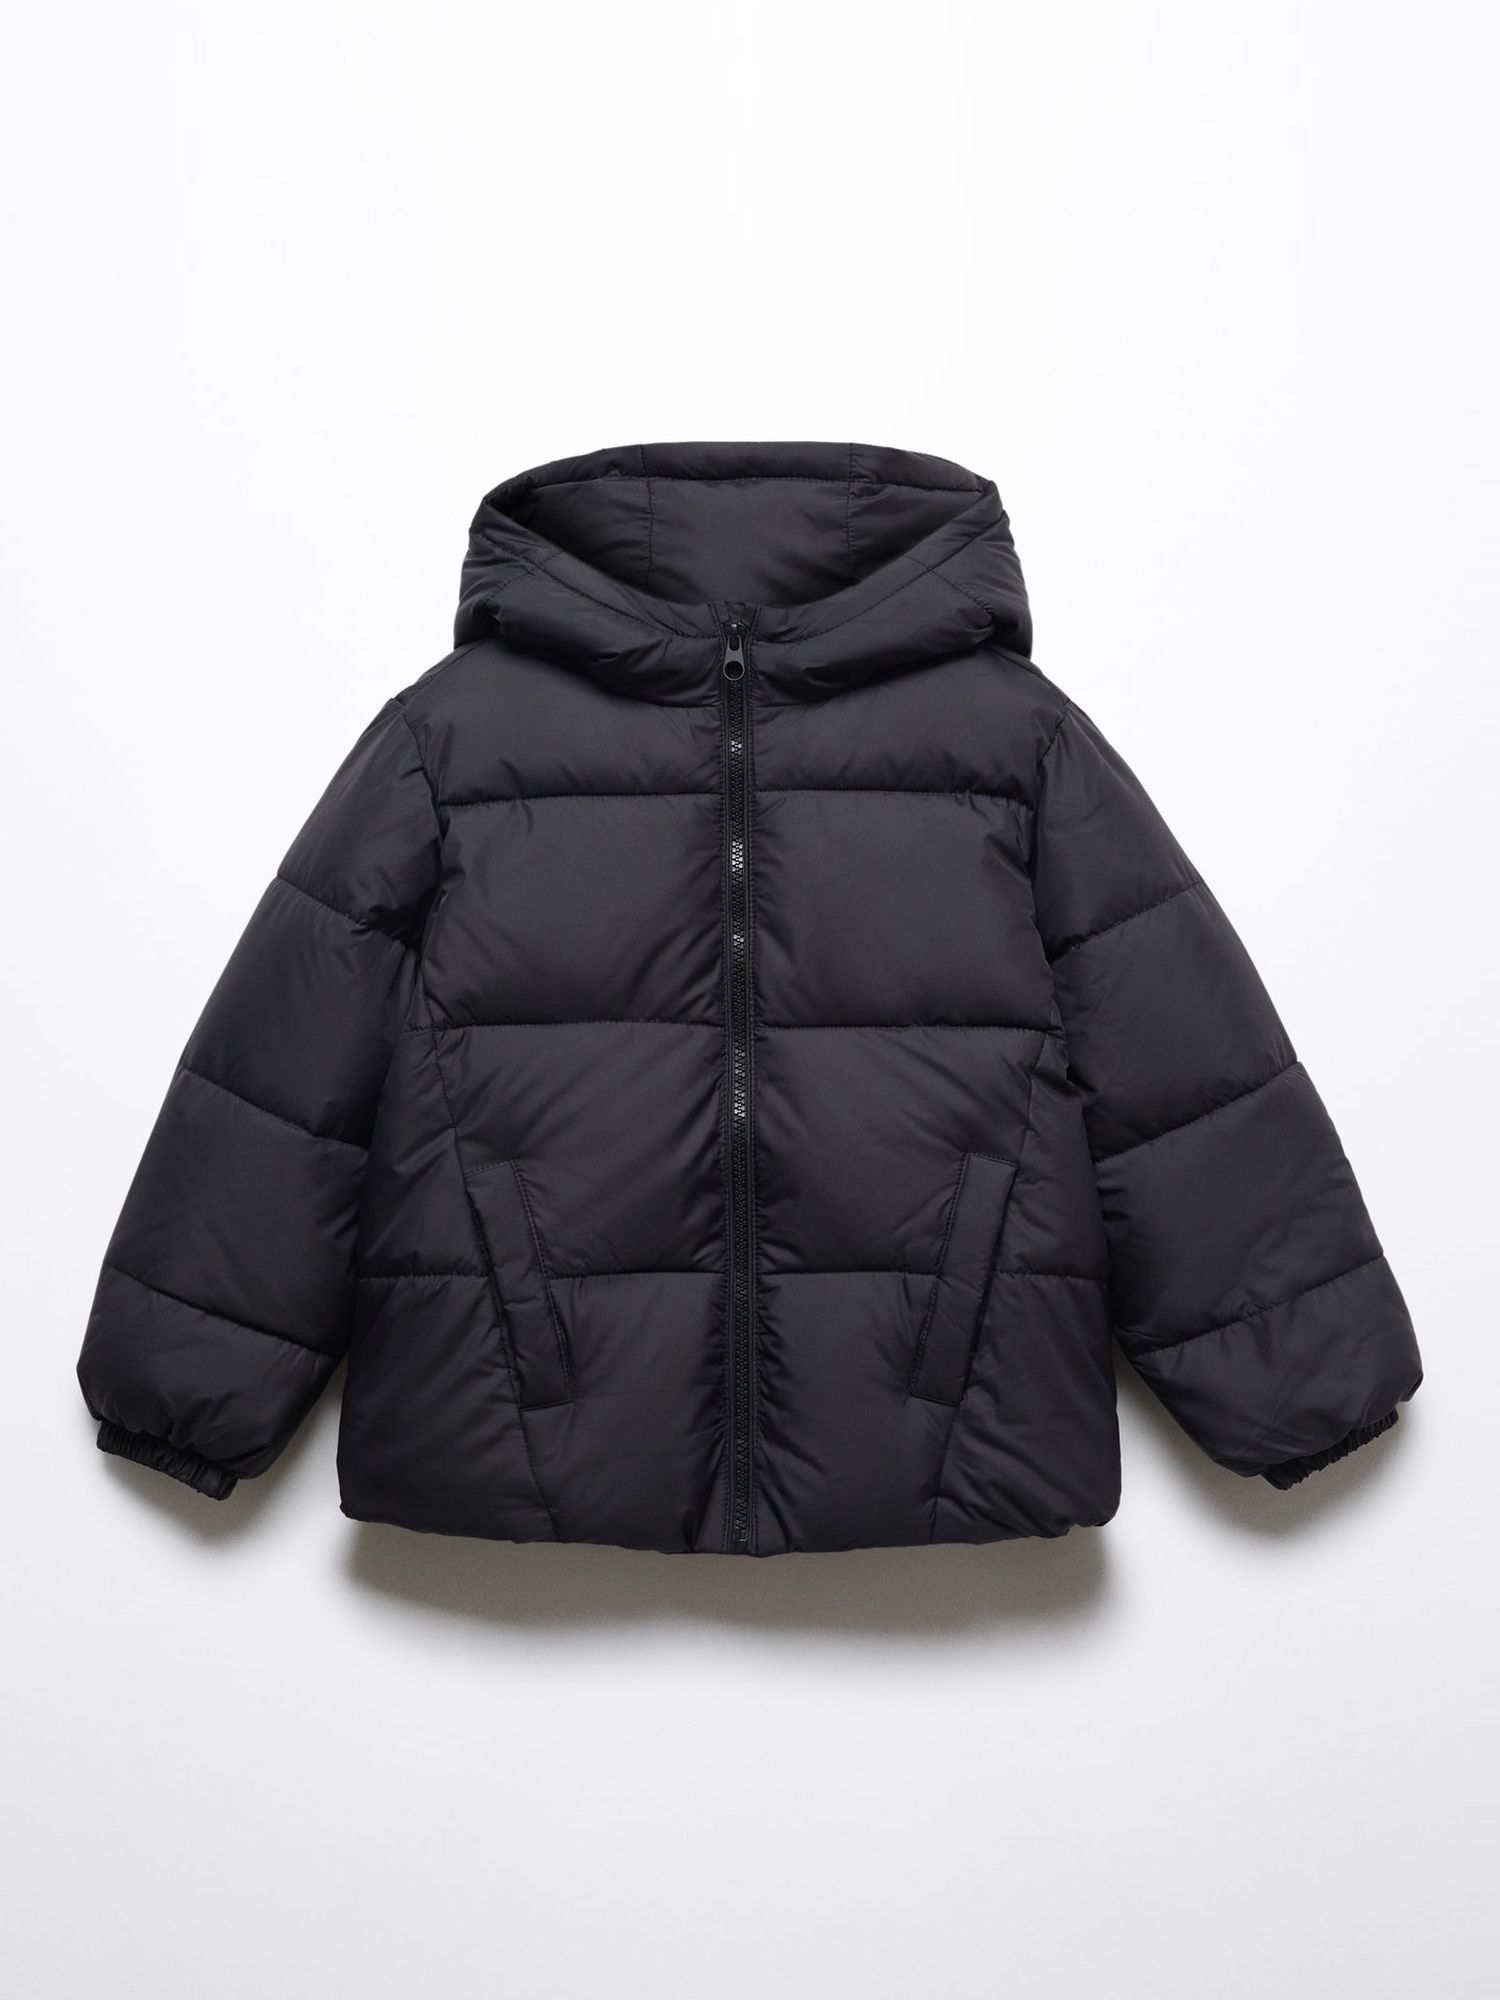 Mango Kids' Ali Hooded Quilted Jacket, Black at John Lewis & Partners